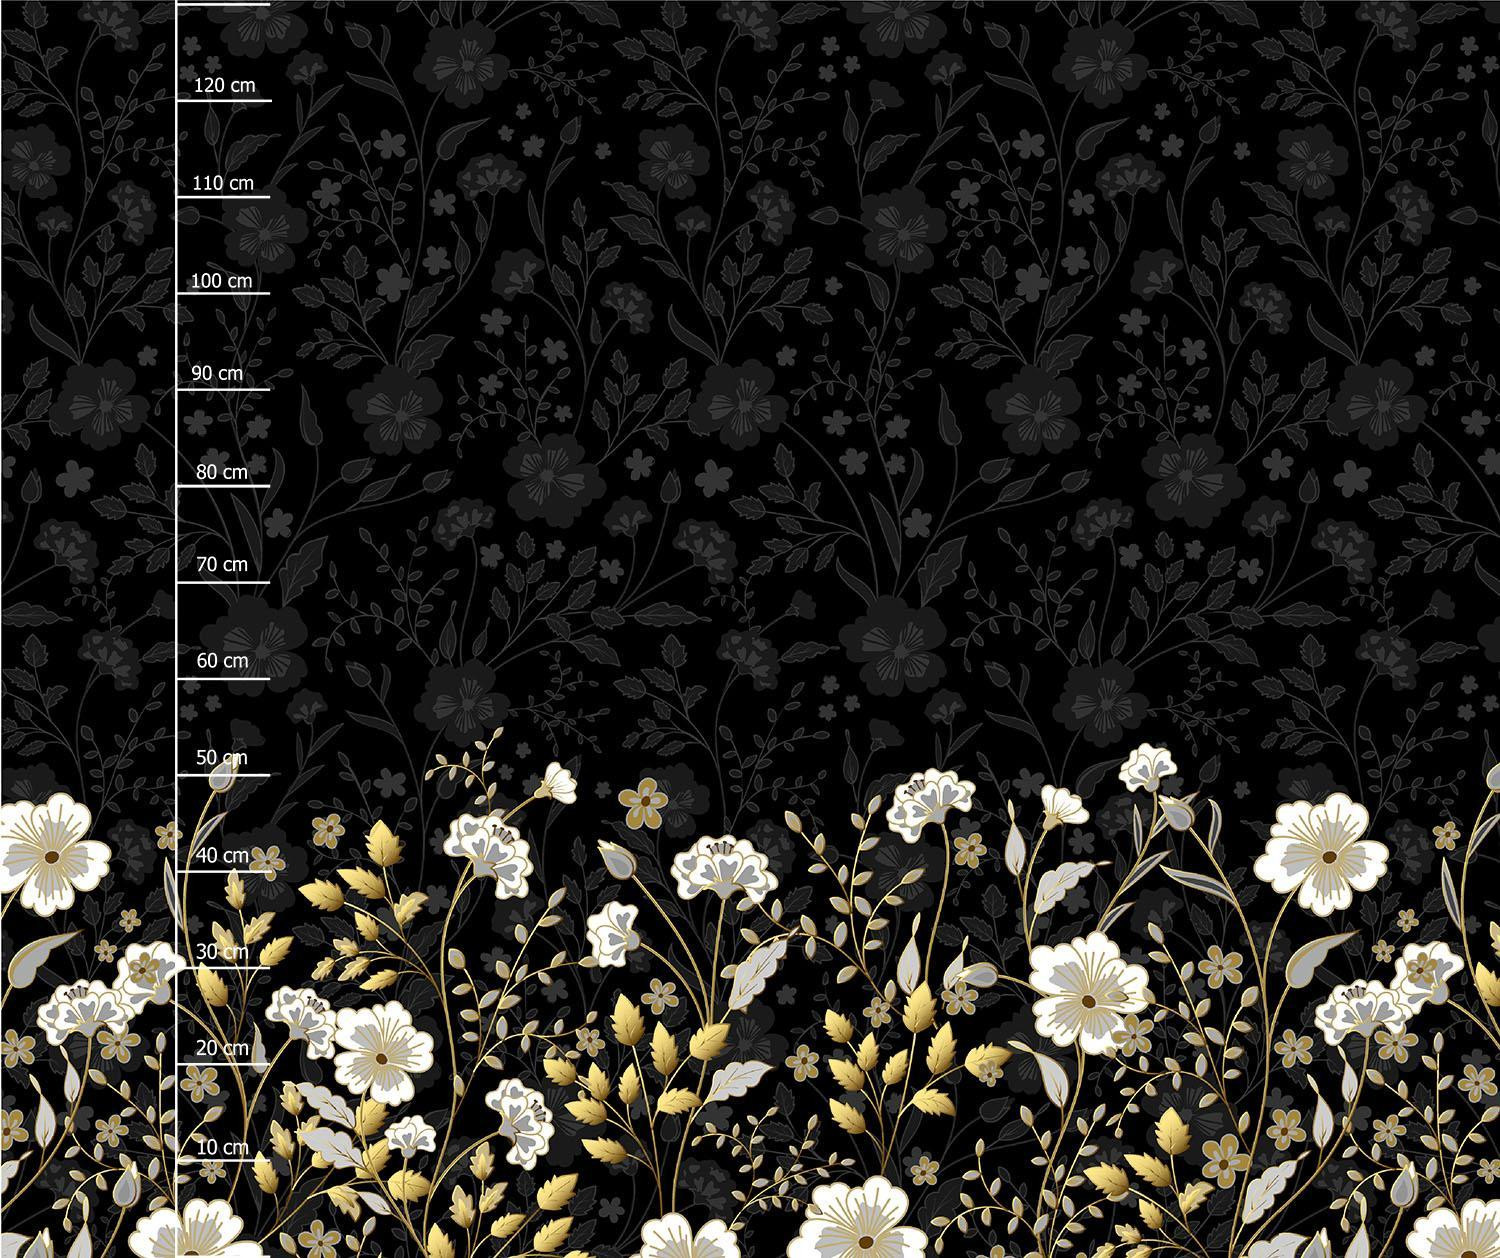 FLOWERS (pattern no. 8) / black - dress panel crepe